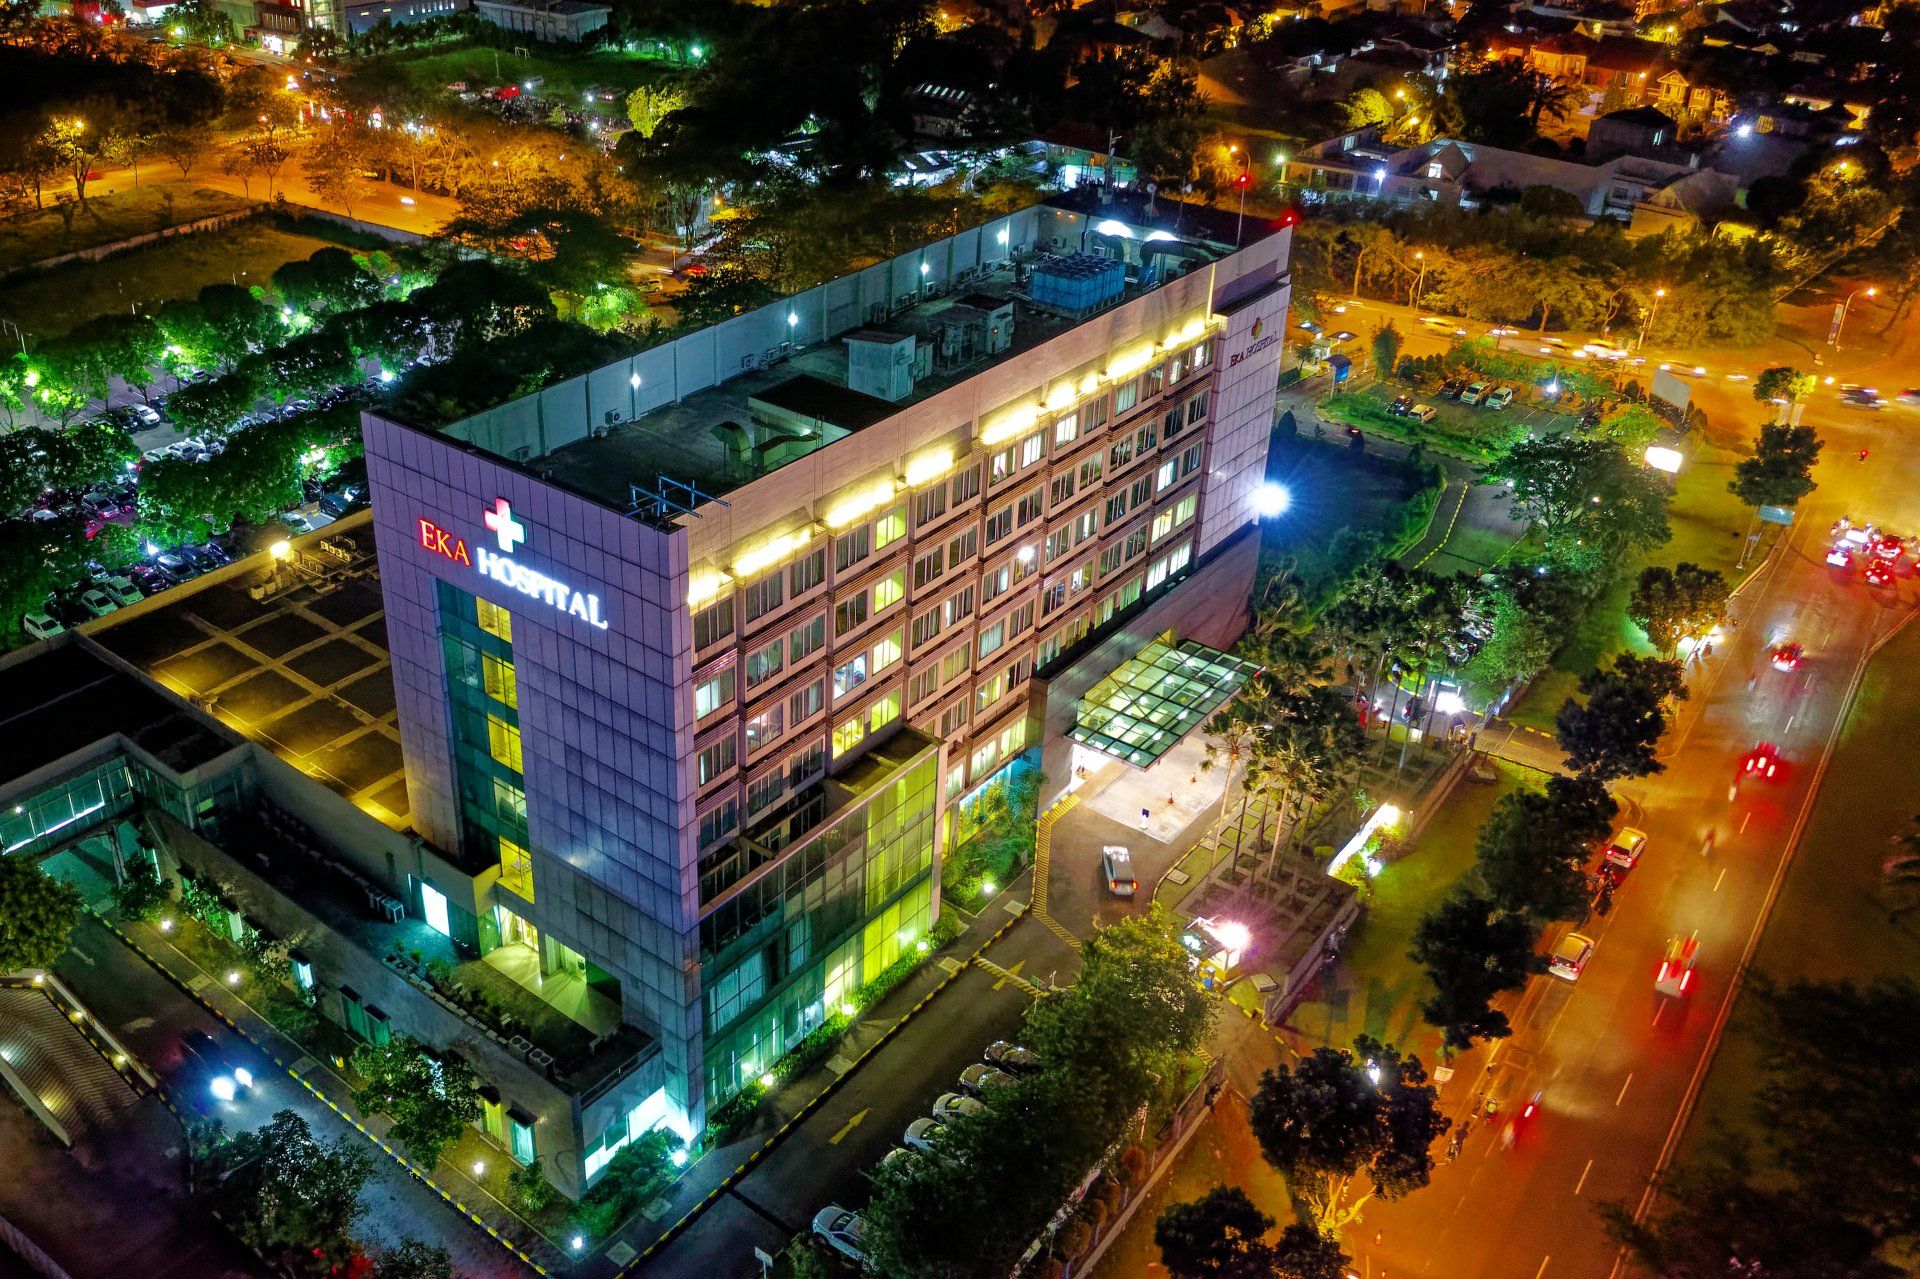 an inner city hospital at night illuminated by lights and street light